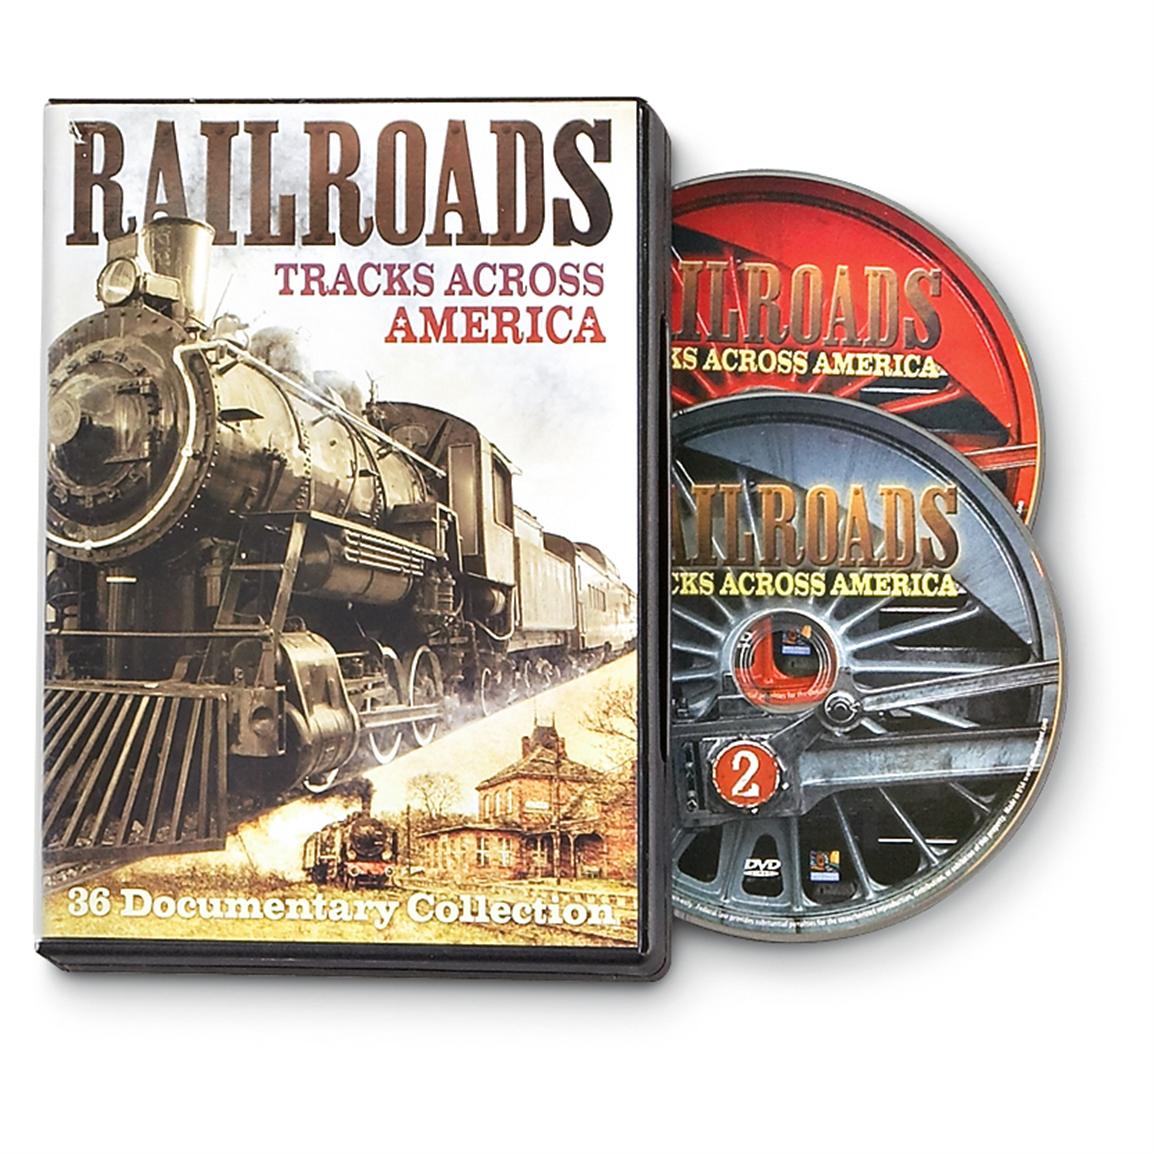  DVD's / "Railroads: Tracks Across America" 36 - documentary DVD